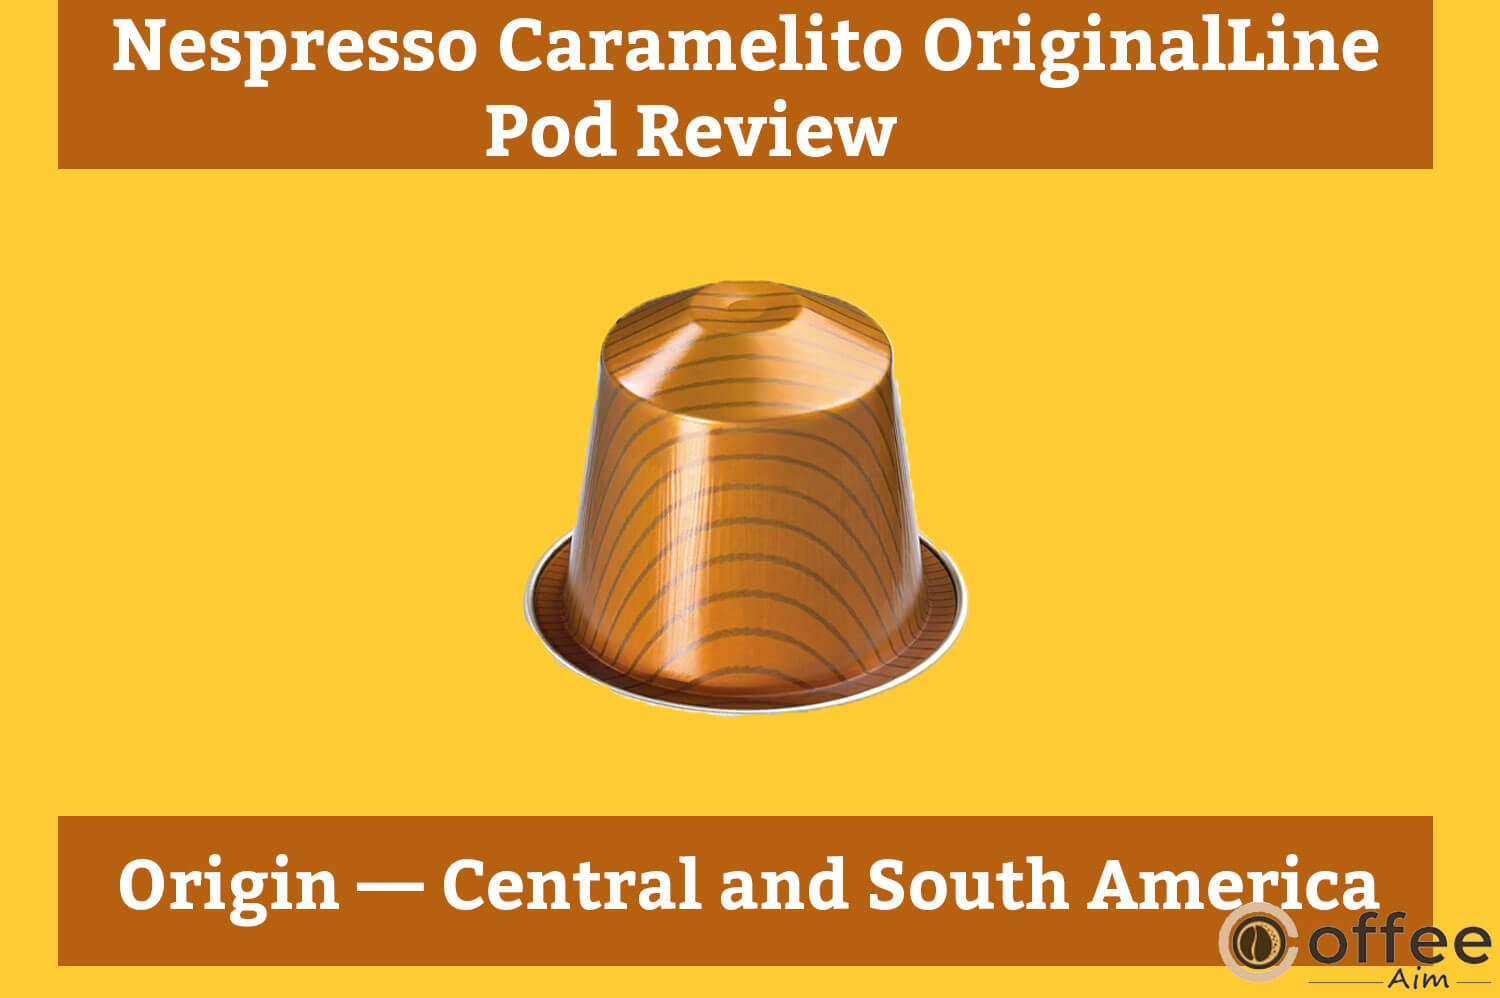 The image depicts the origin of the "Nespresso Caramelito OriginalLine Pod," a focus in the article "Nespresso Caramelito Pod Review."